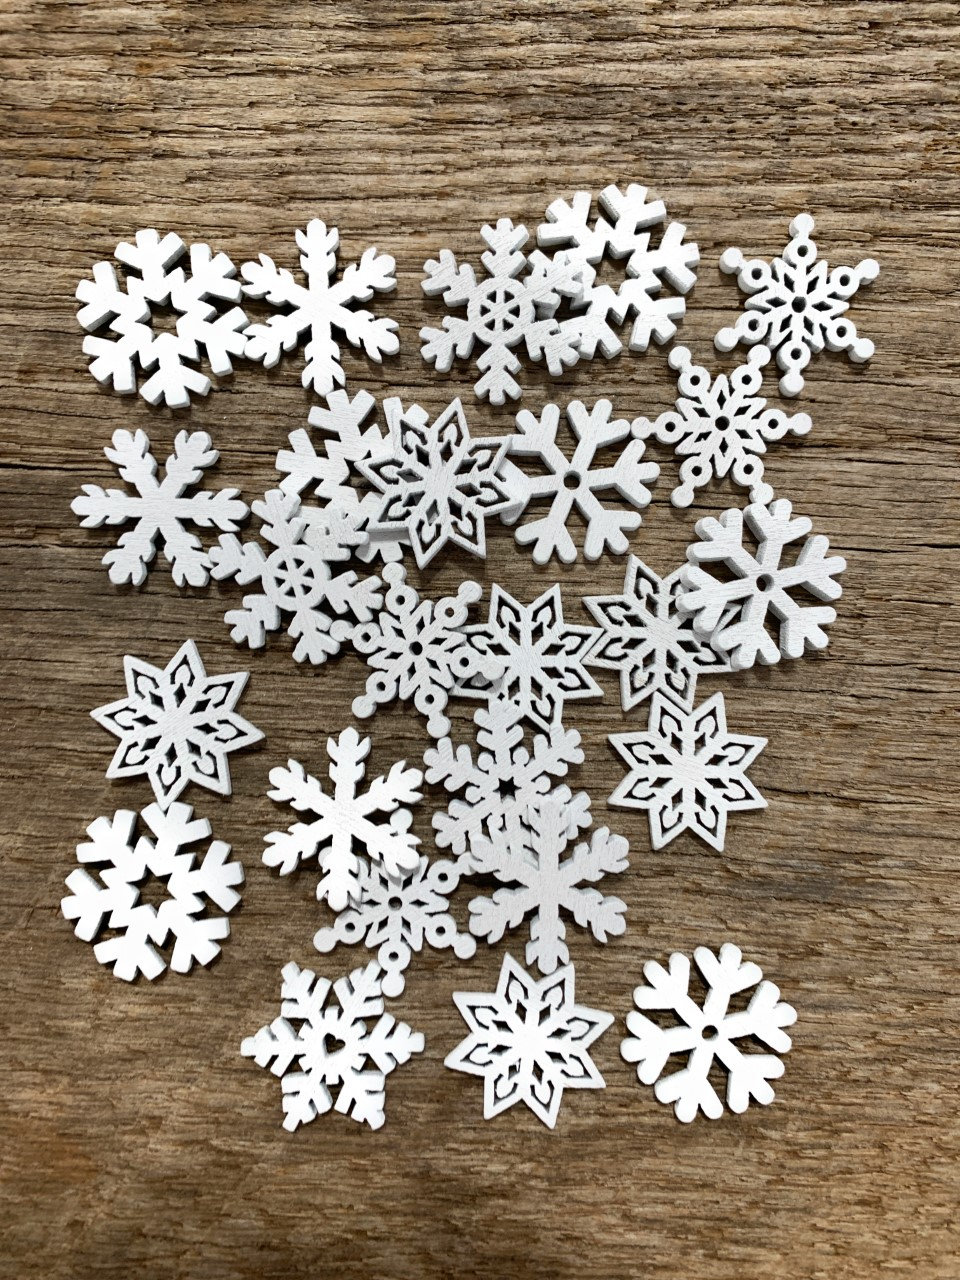 12-100pcs/lot White plastic Snowflakes Small Snowflake Wedding/Christmas  decoration craft Diy accessories